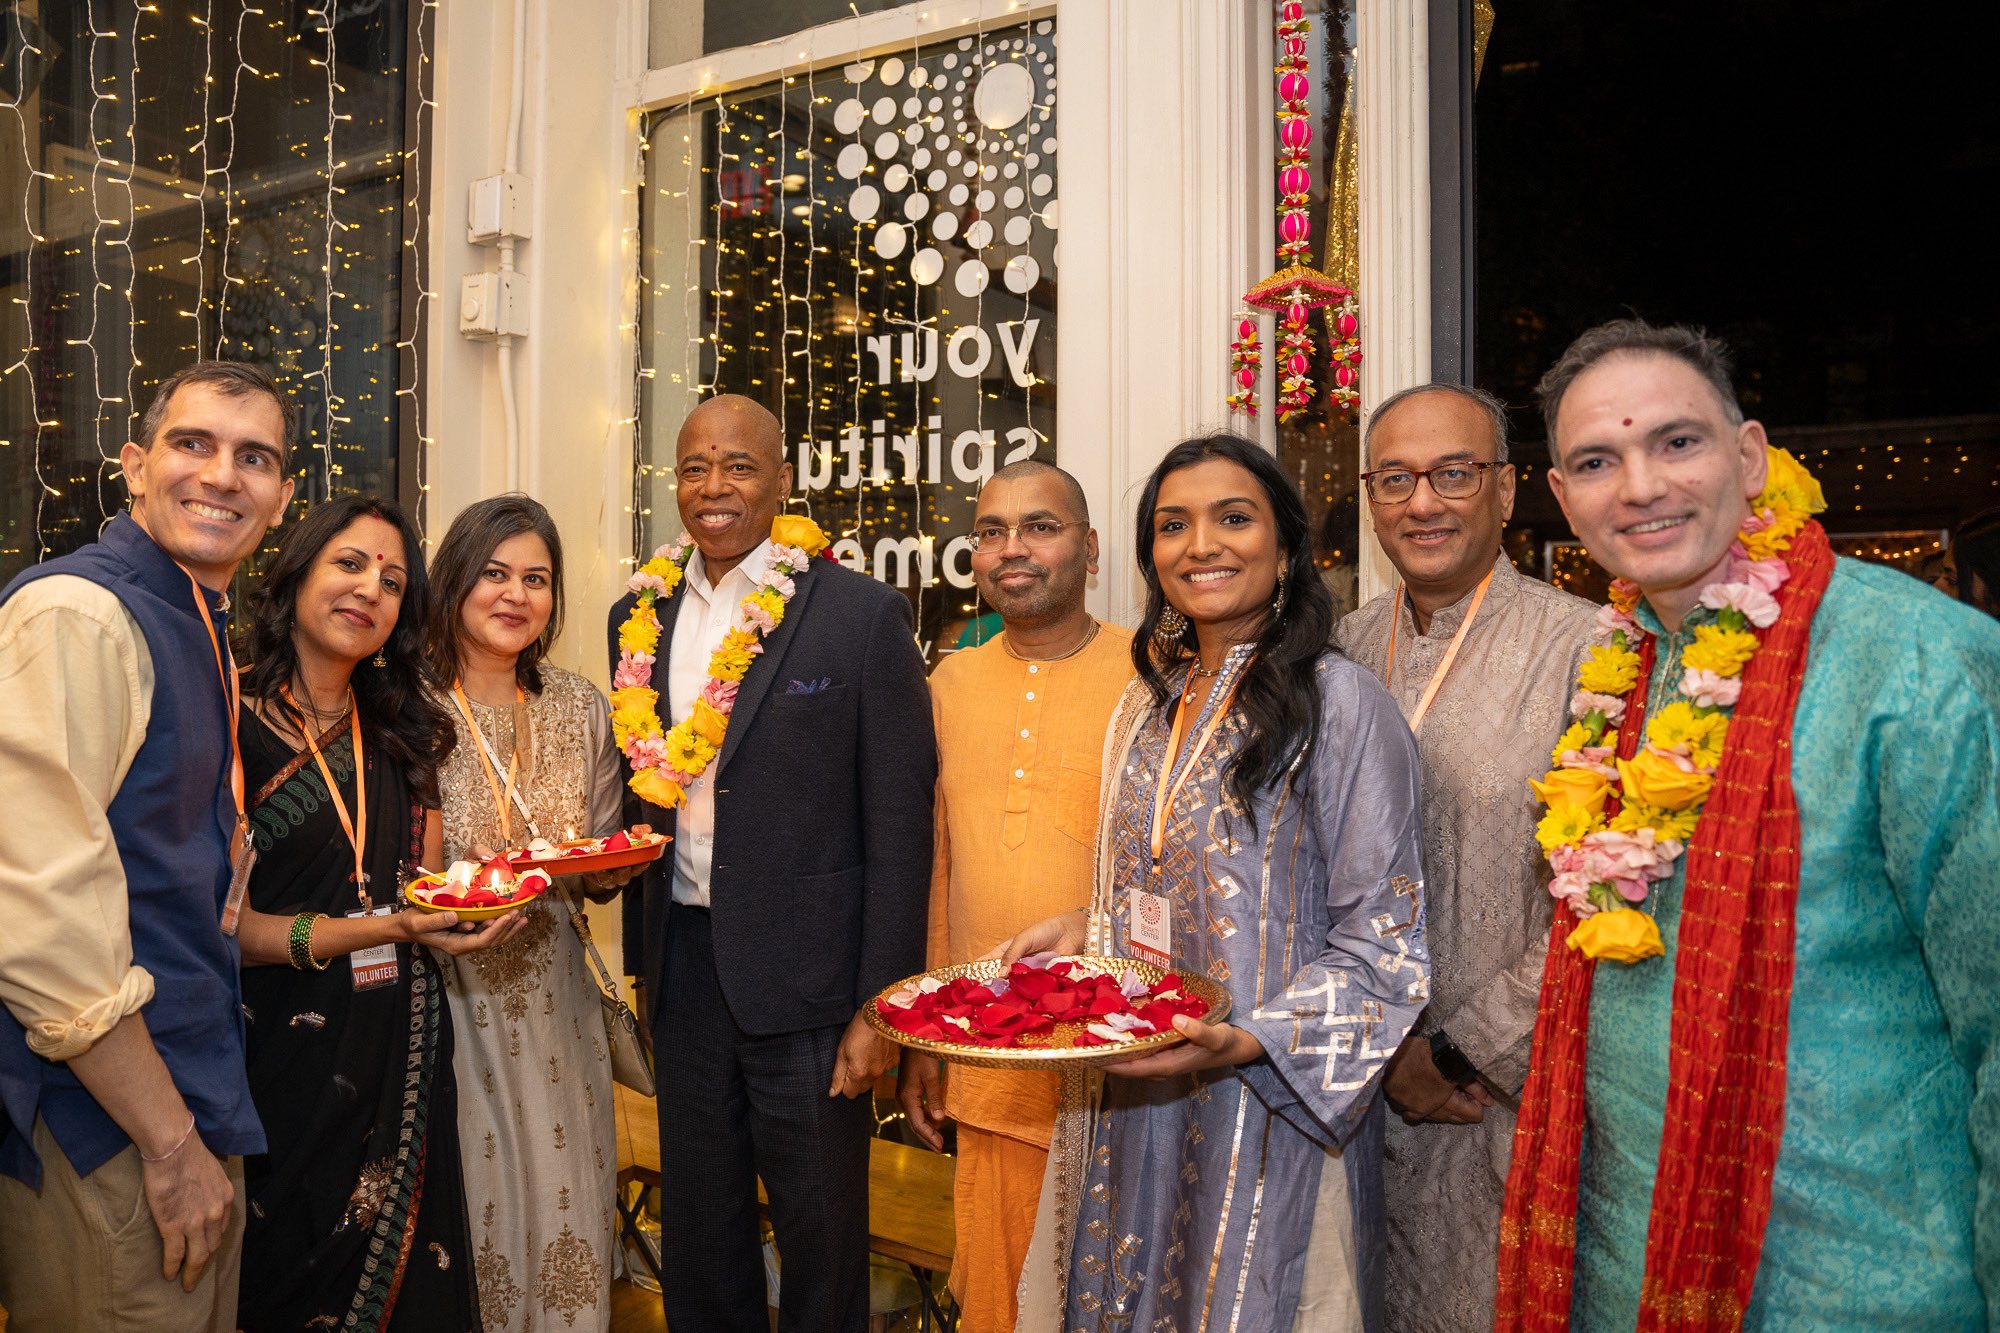 NYC celebrates Diwali in an iconic way, led by Mayor Adams